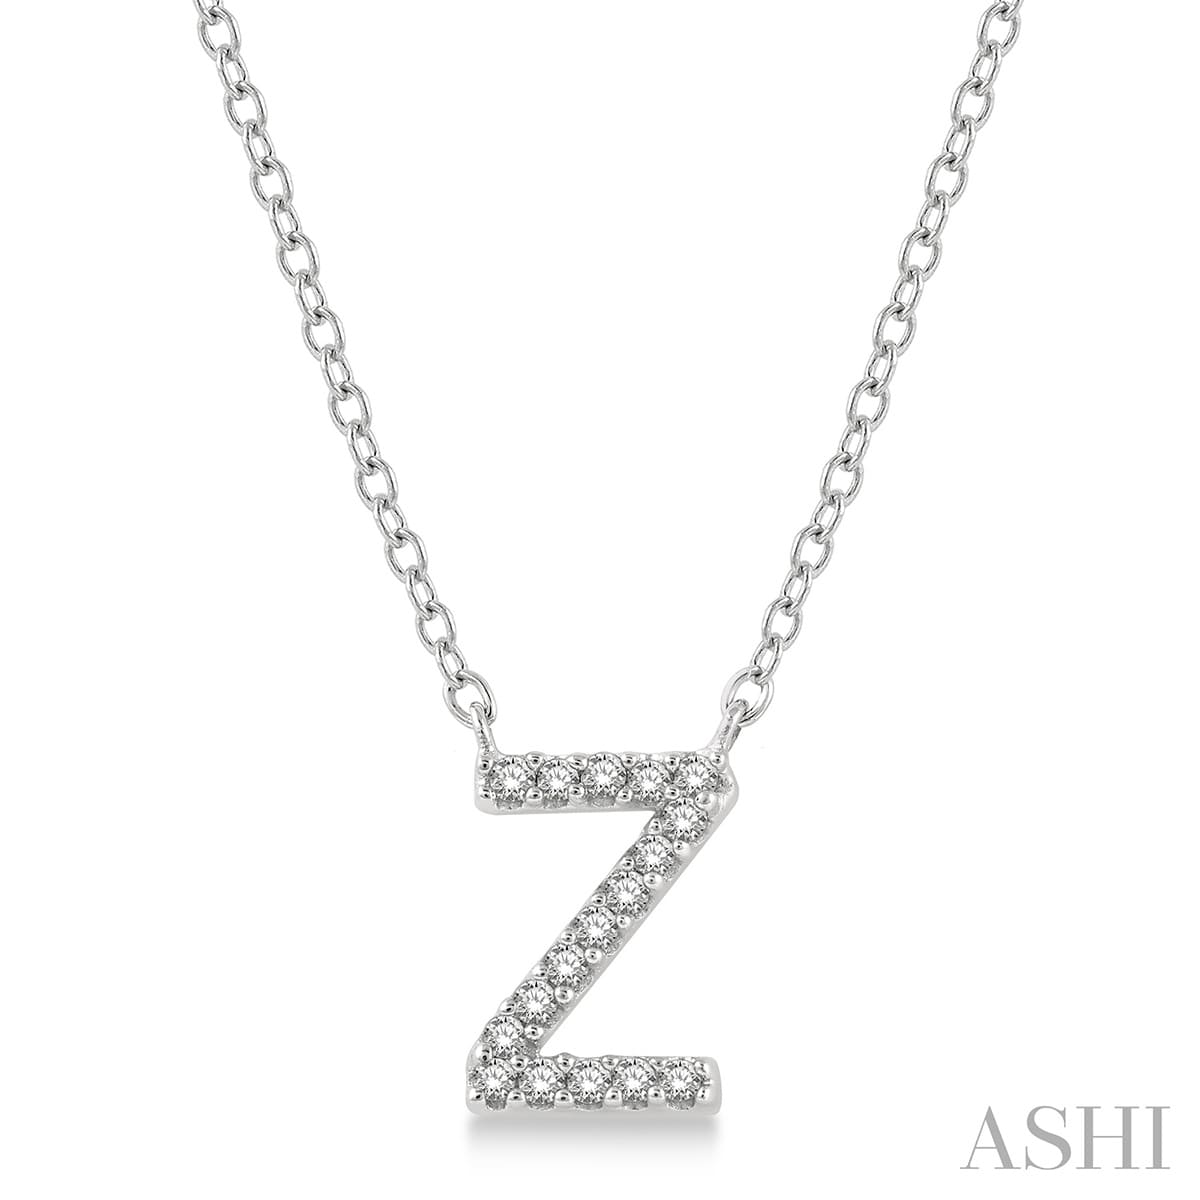 'Z' Initial Diamond Pendant